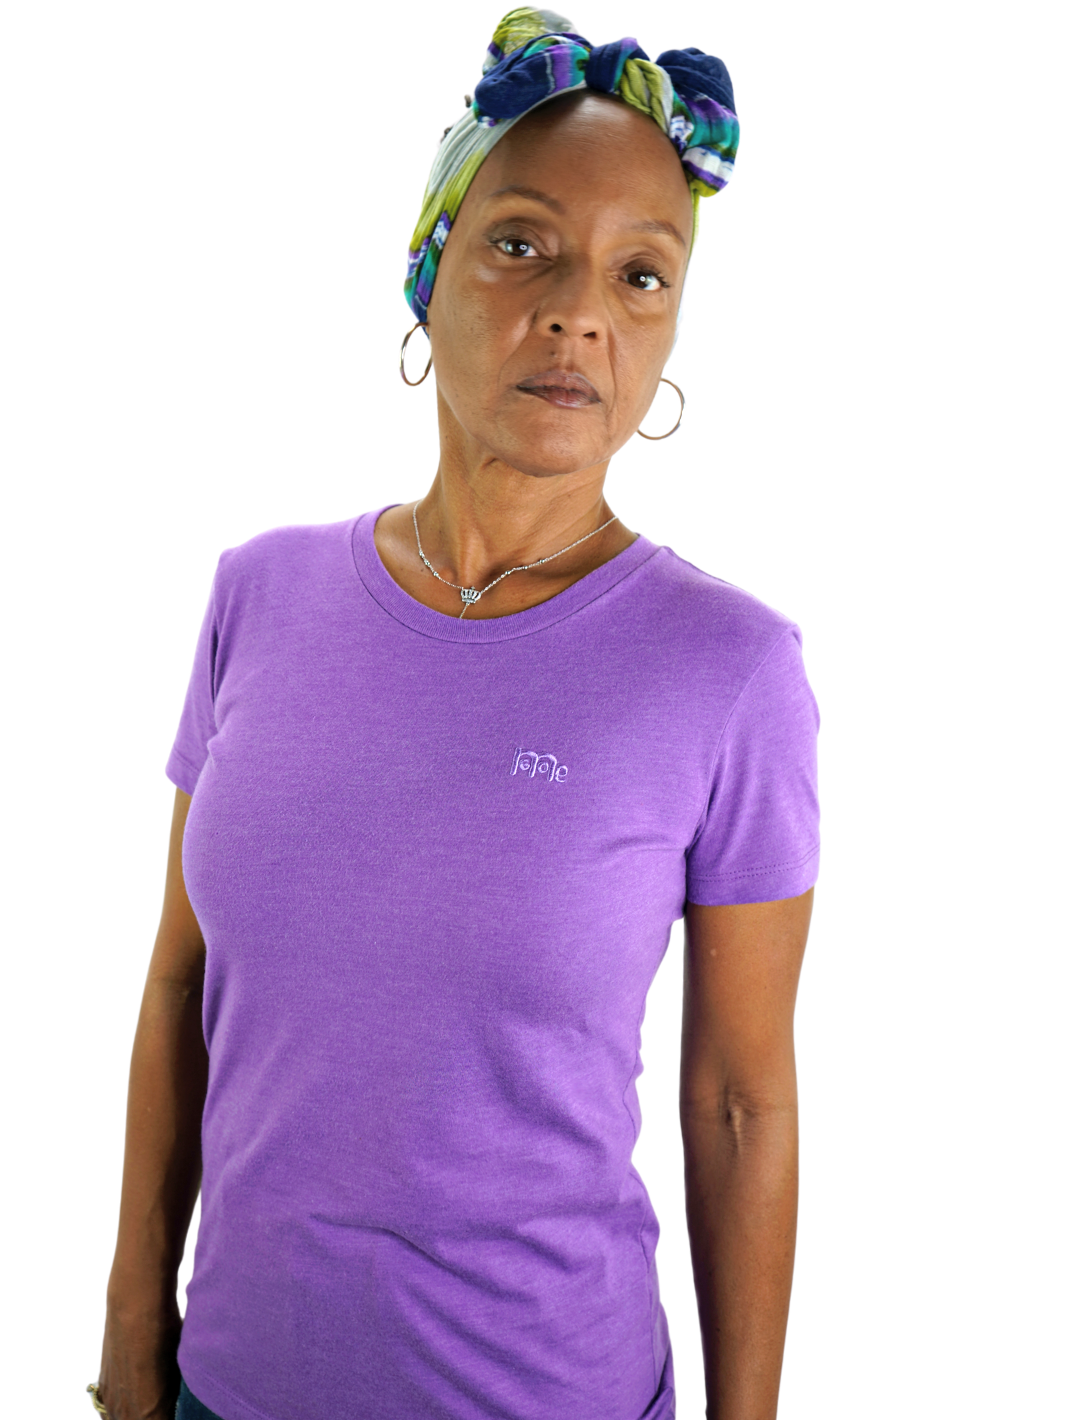 Women's Purple GODinme T-Shirt: Super soft, lightweight with feminine curve design, and matching Purple GODinme logo at left chest.